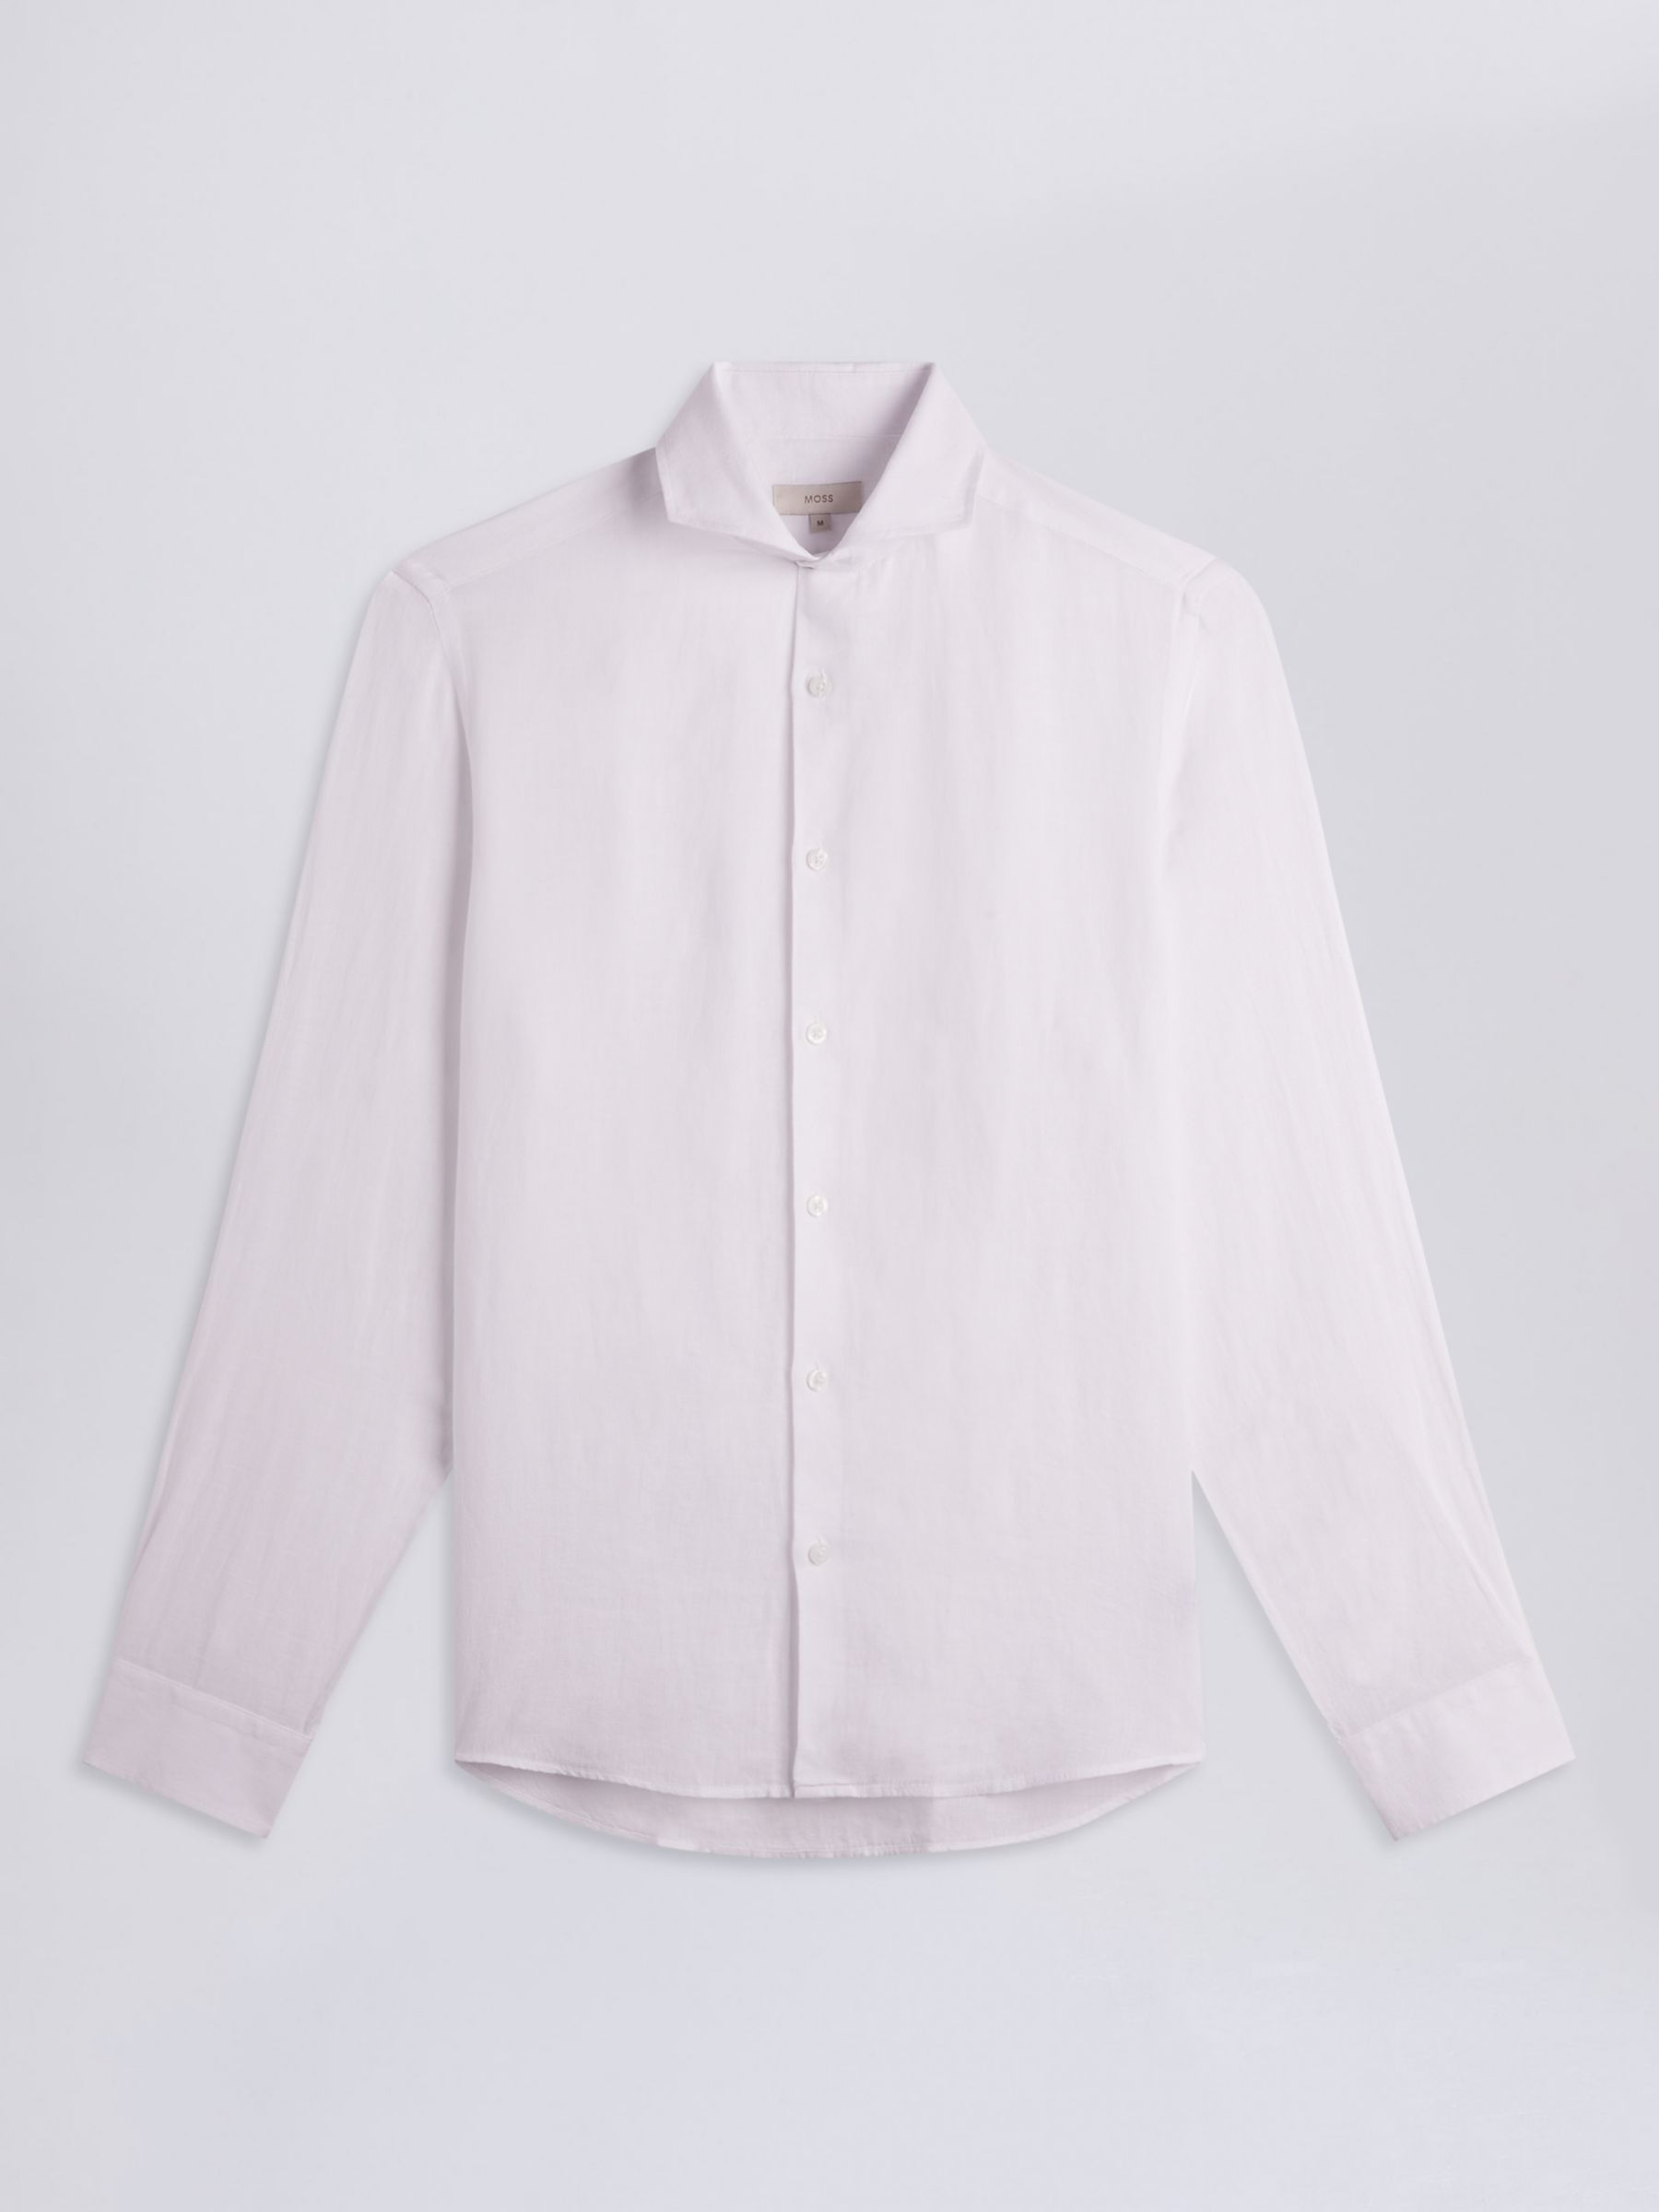 Moss Tailored Fit Linen Long Sleeve Shirt, White, S